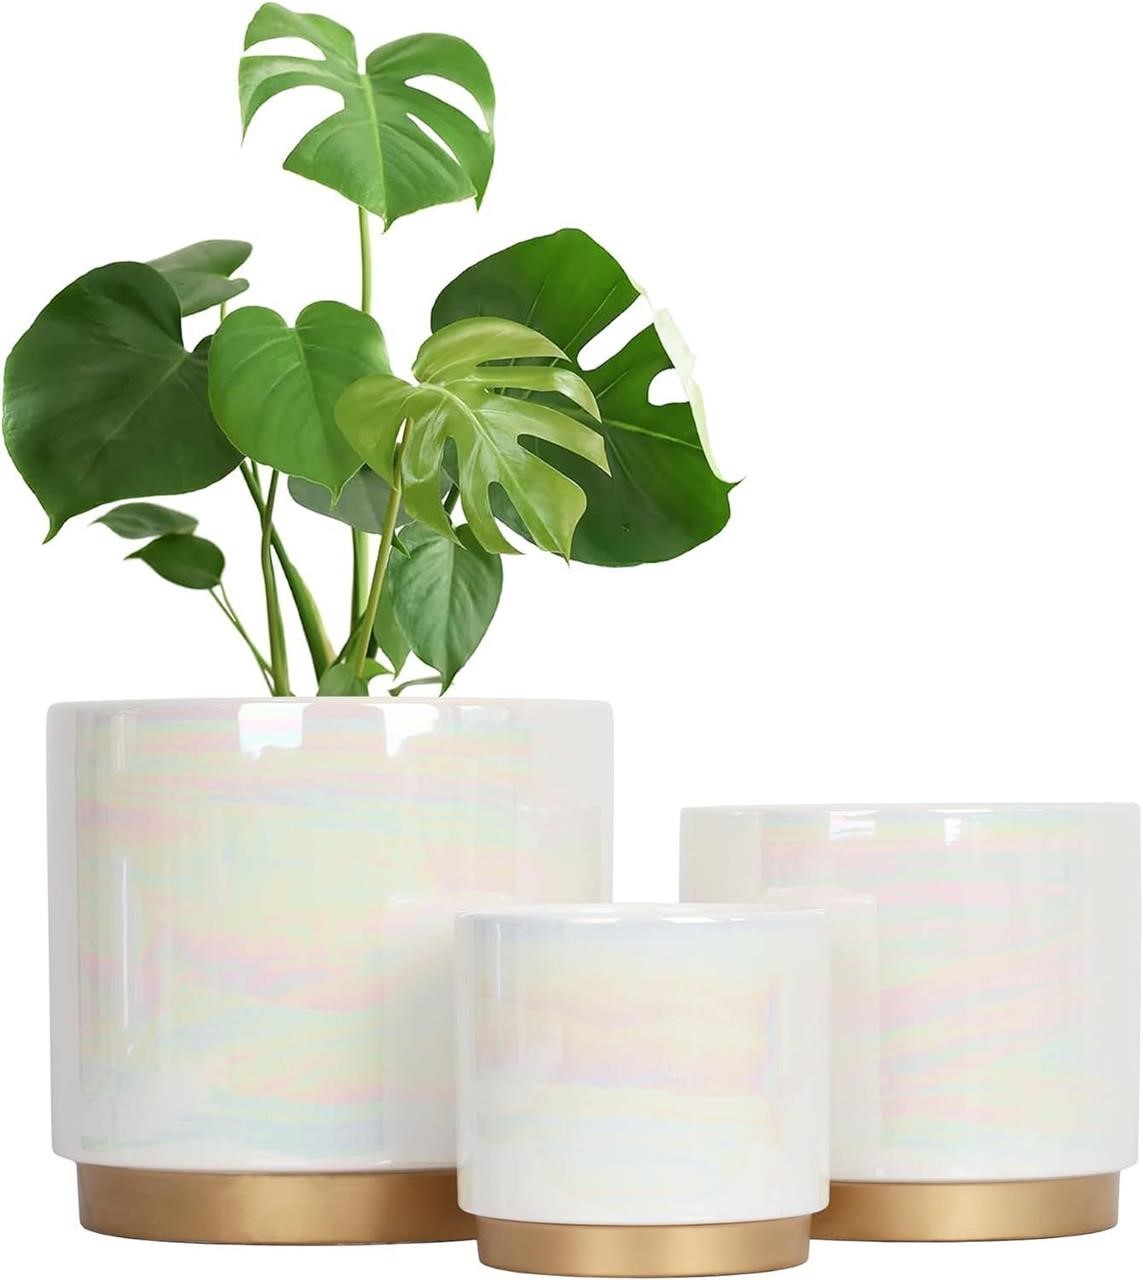 White Indoor Pots for Plants, Ceramic Planter